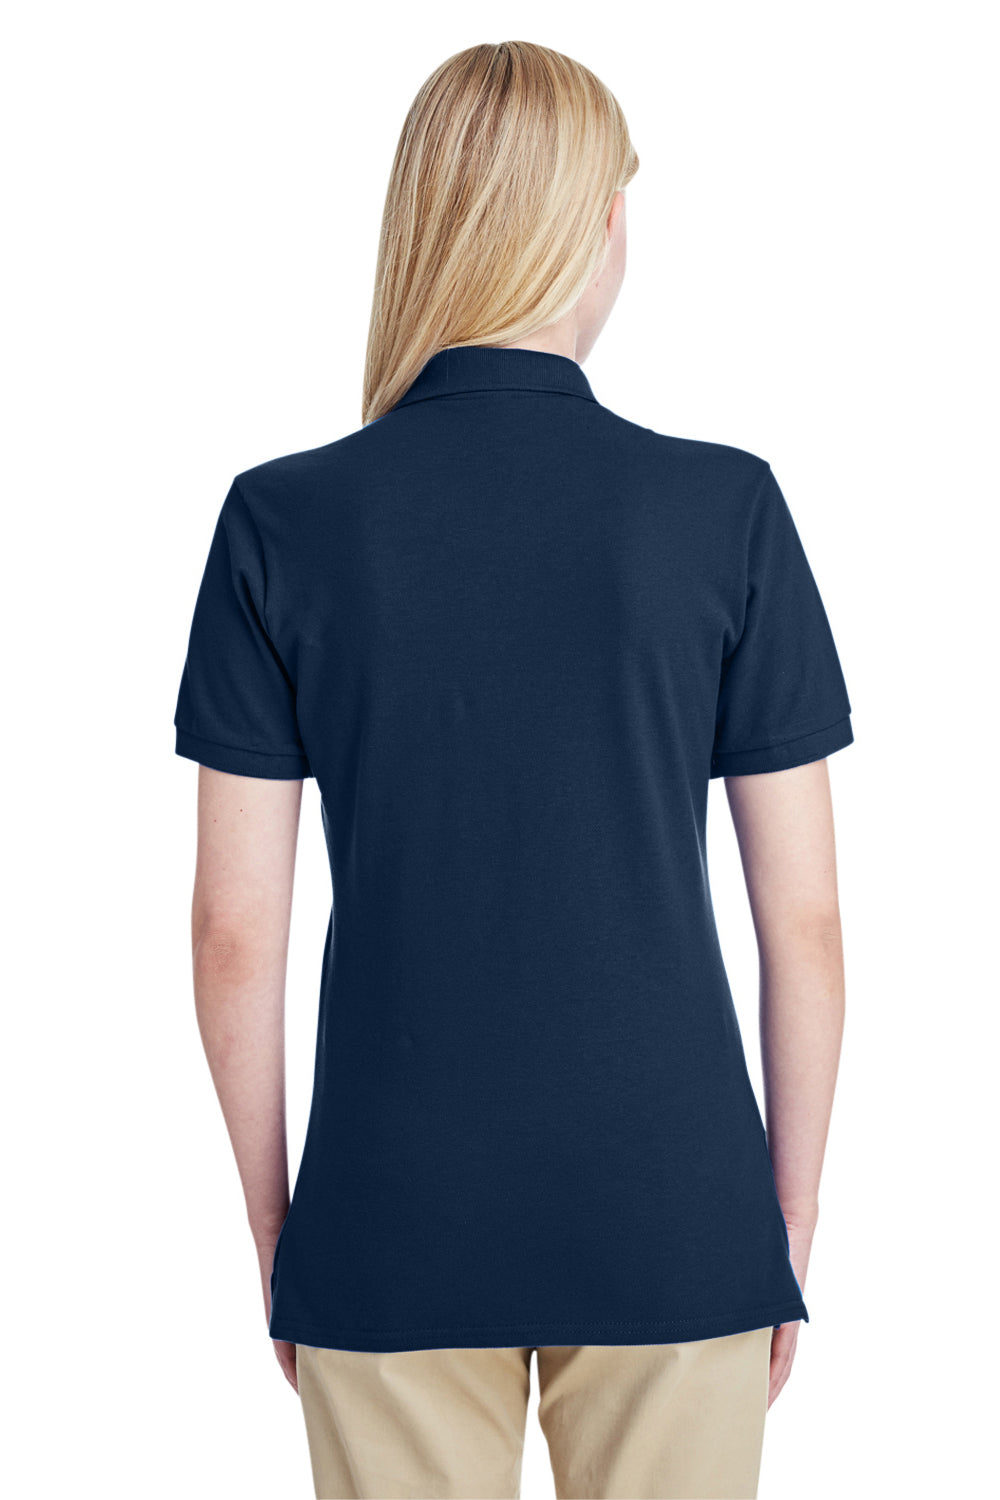 Jerzees 443WR Womens Short Sleeve Polo Shirt Navy Blue Back